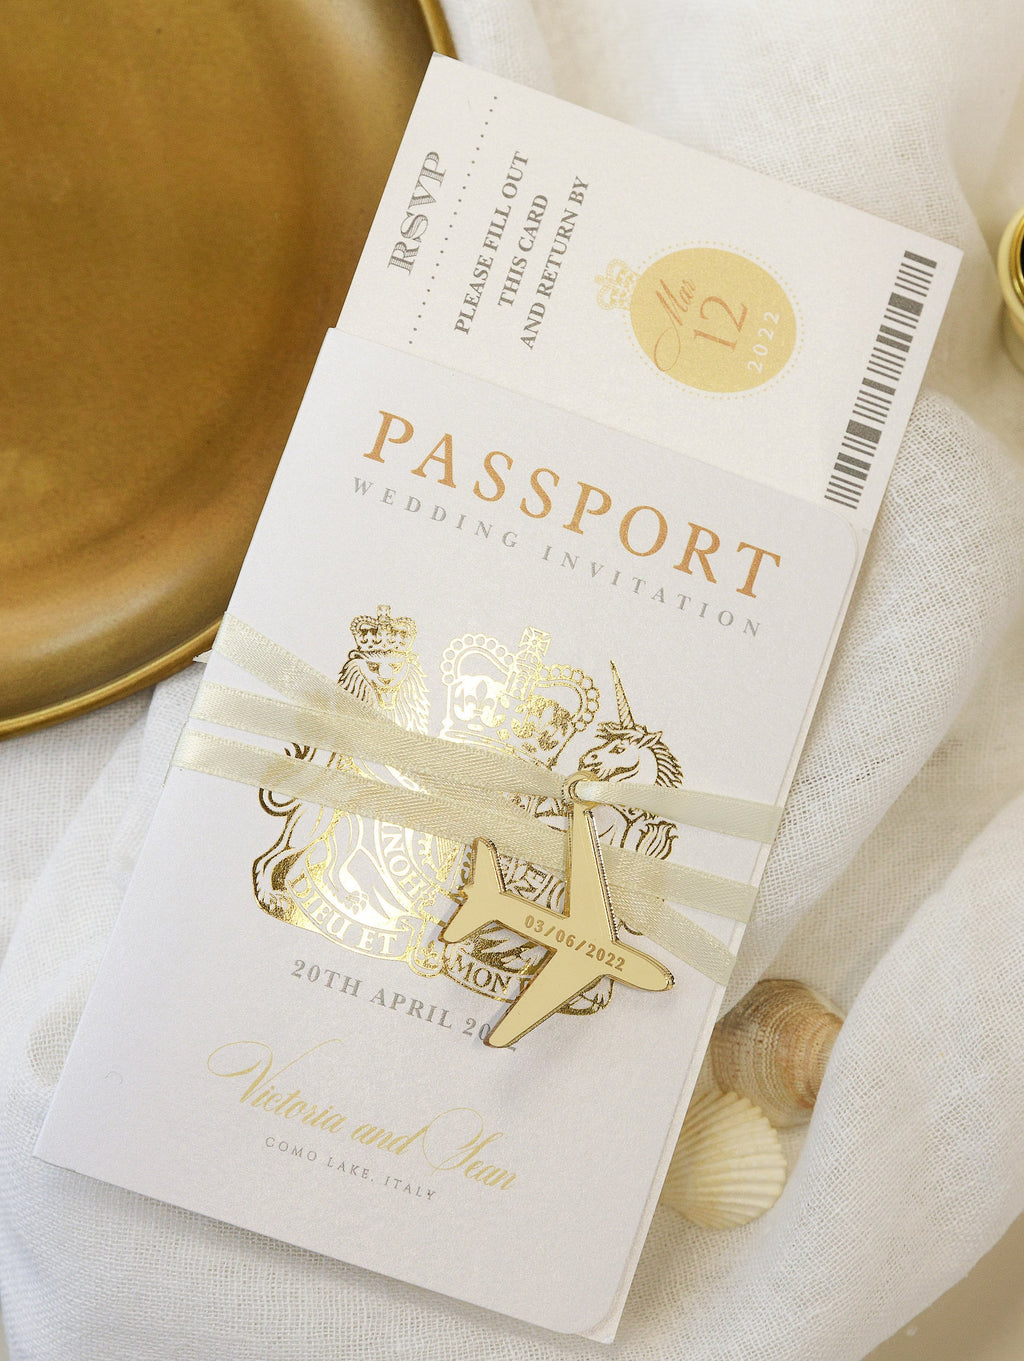 Gold Invite Plane Luxury Passport Wedding Invitation Plane Engraved, Gold Foil Boarding Pass, Wedding Abroad, Destination Wedding, Travel